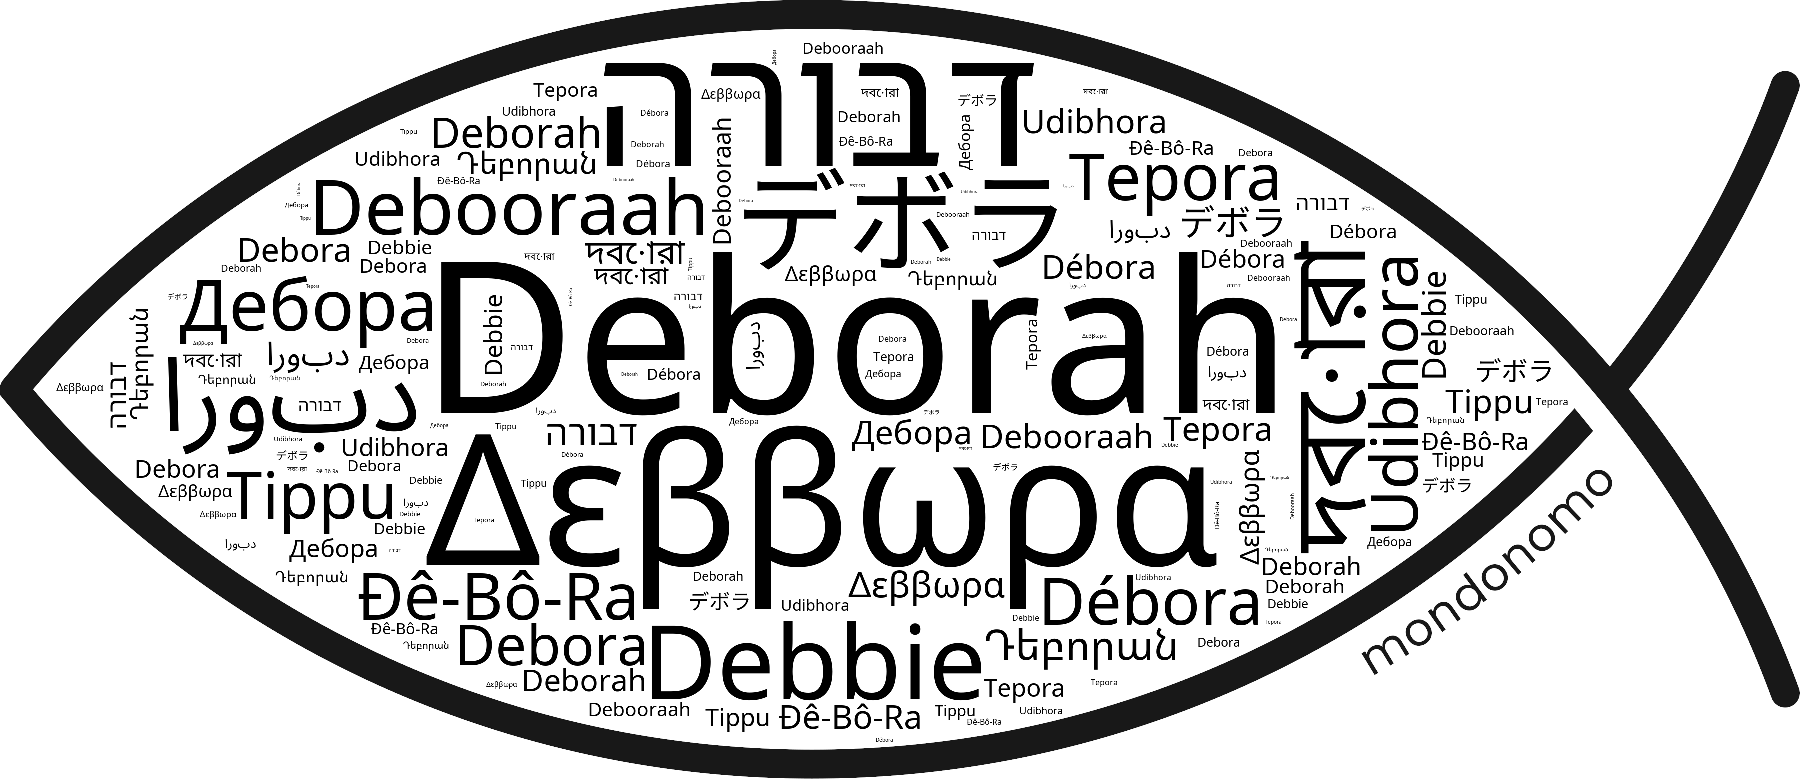 Name Deborah in the world's Bibles